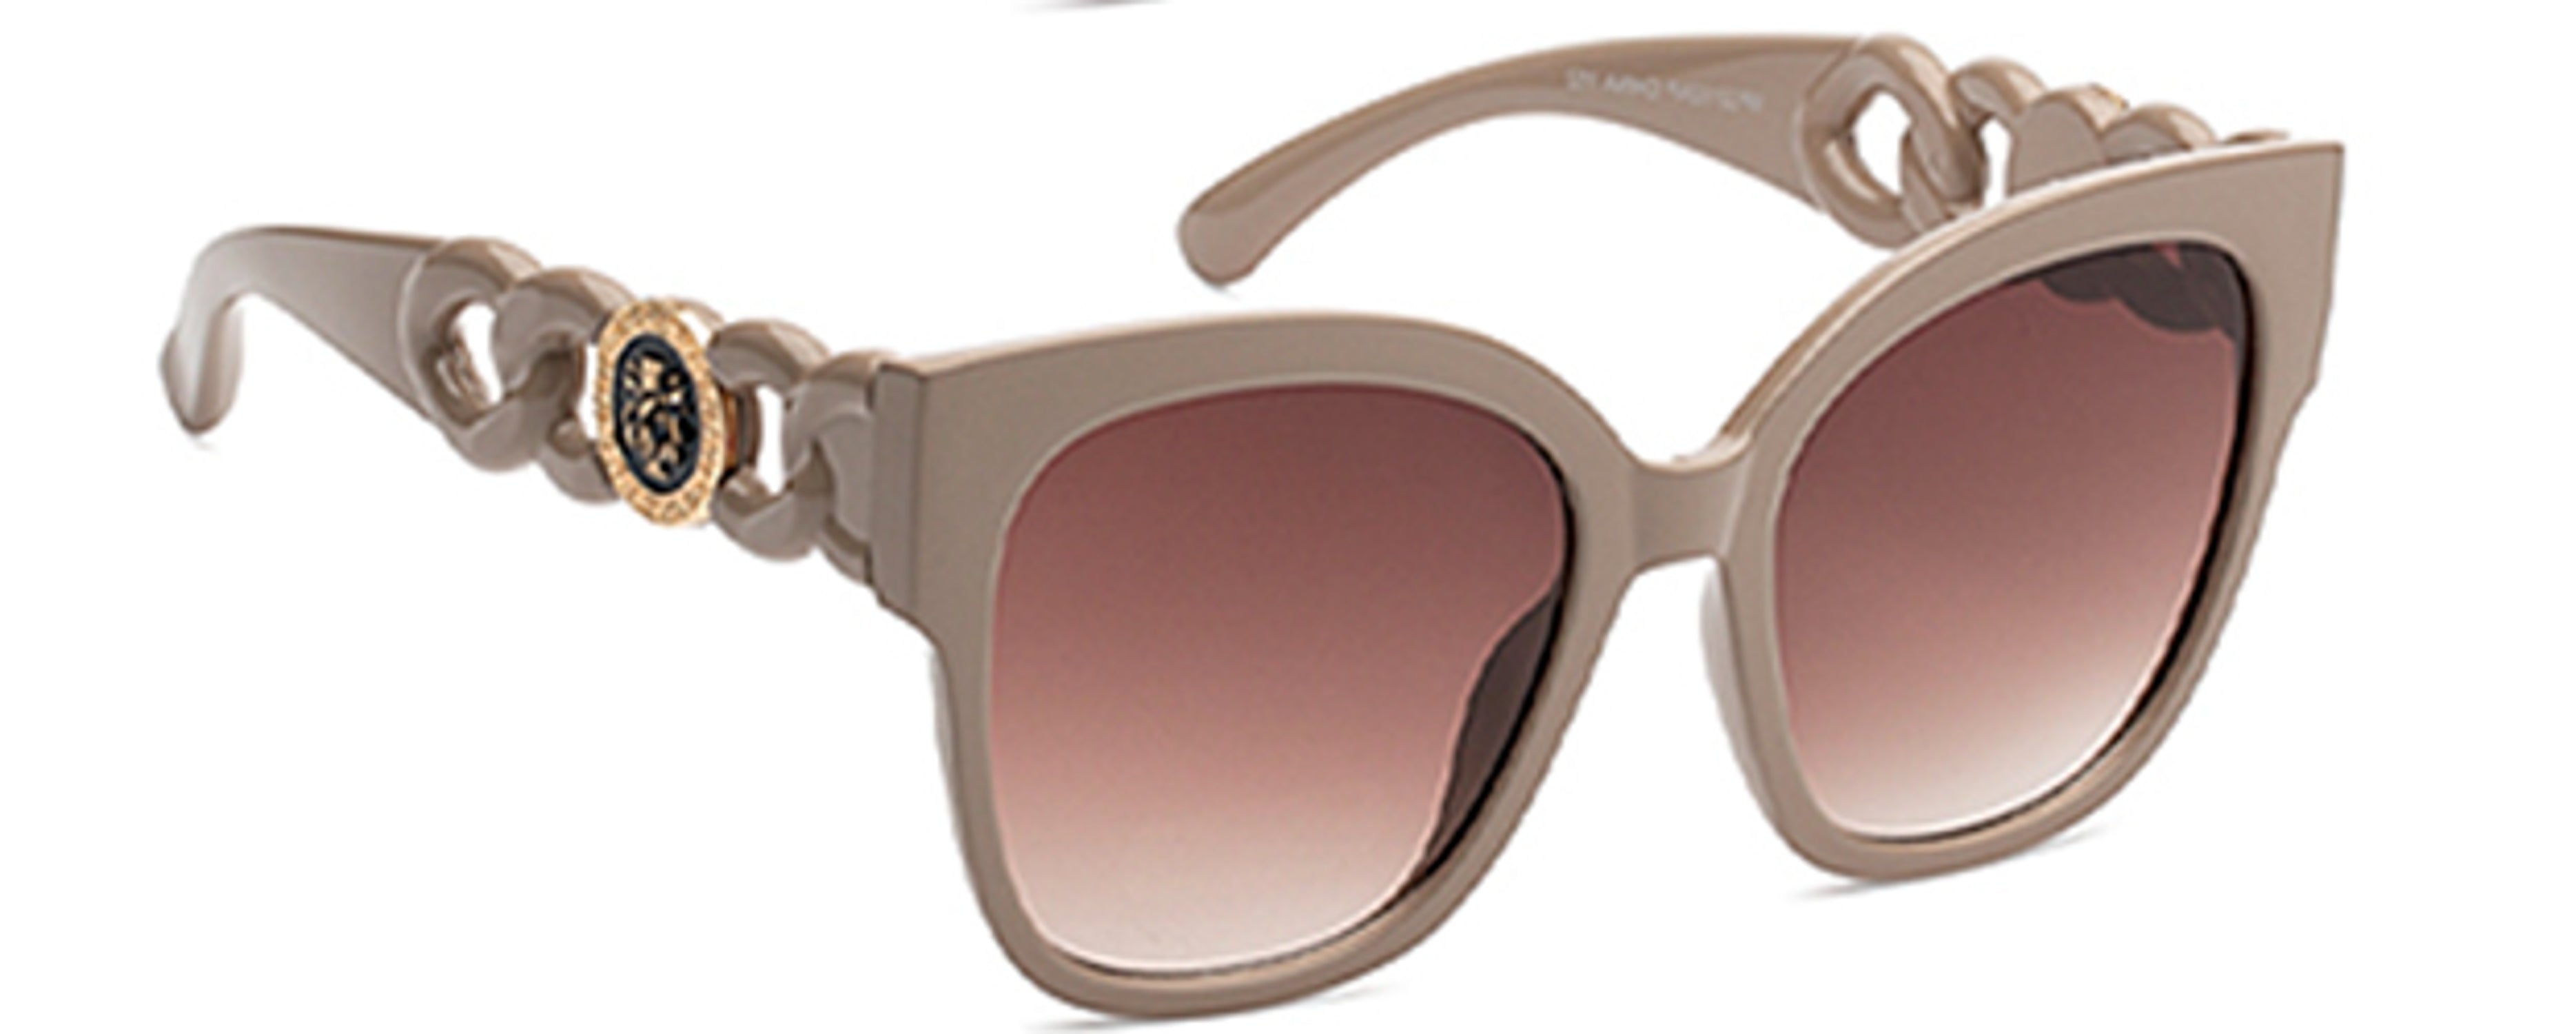 Ivory - Fashion Design Round Cat Eye Sunglasses - Sunglasses at TFC&H Co.